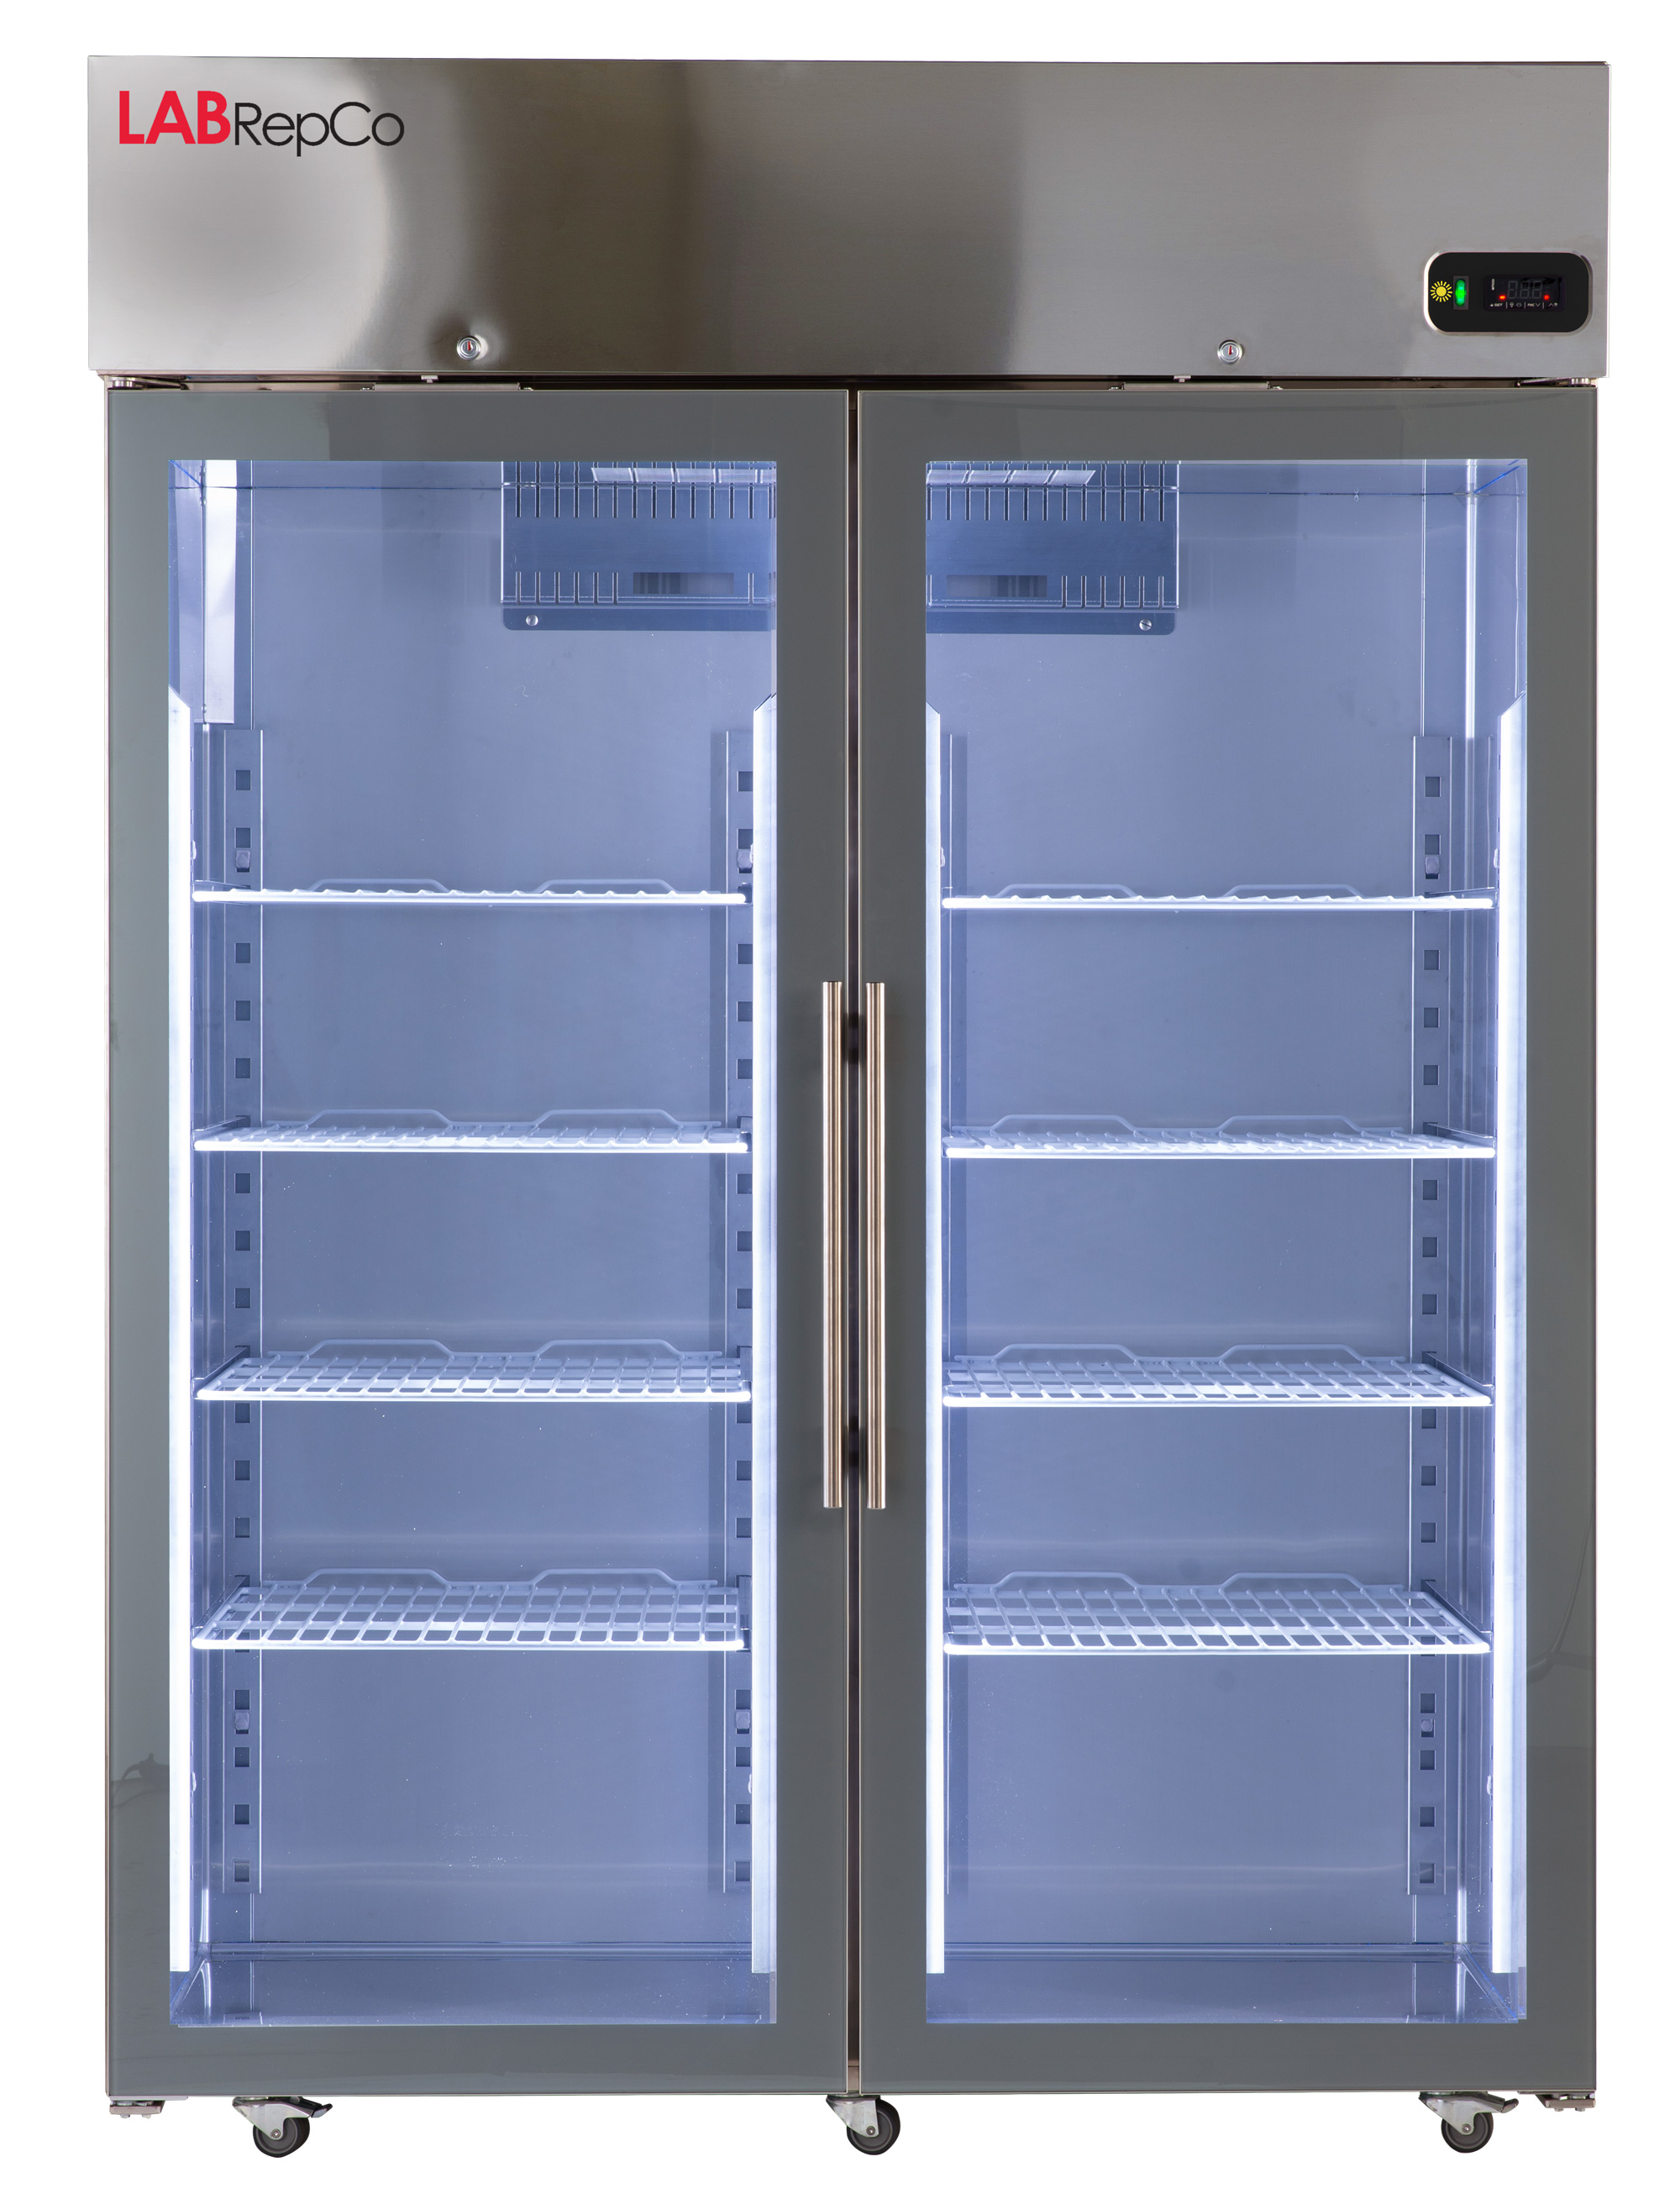 Futura Ld Series 49 Cu Ft Laboratory Refrigerator Hinged Stainless Steel Glass Door Labrepco Llc